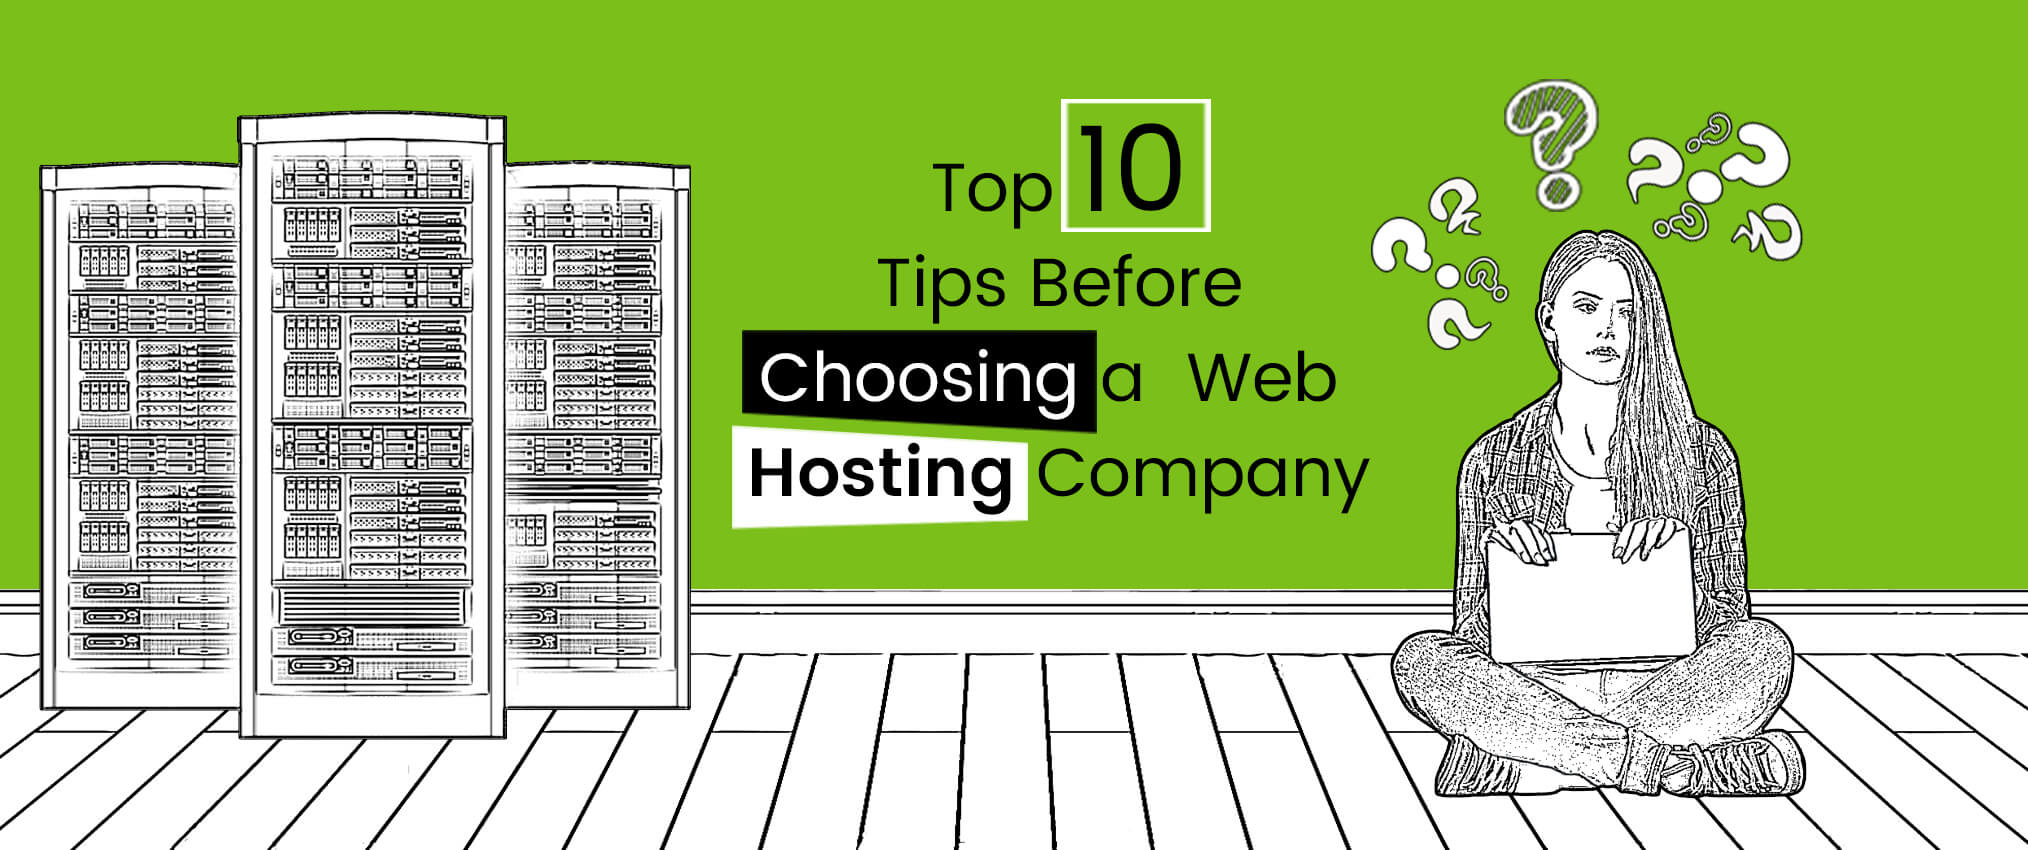 Top 10 Tips Before Choosing a Web Hosting Company